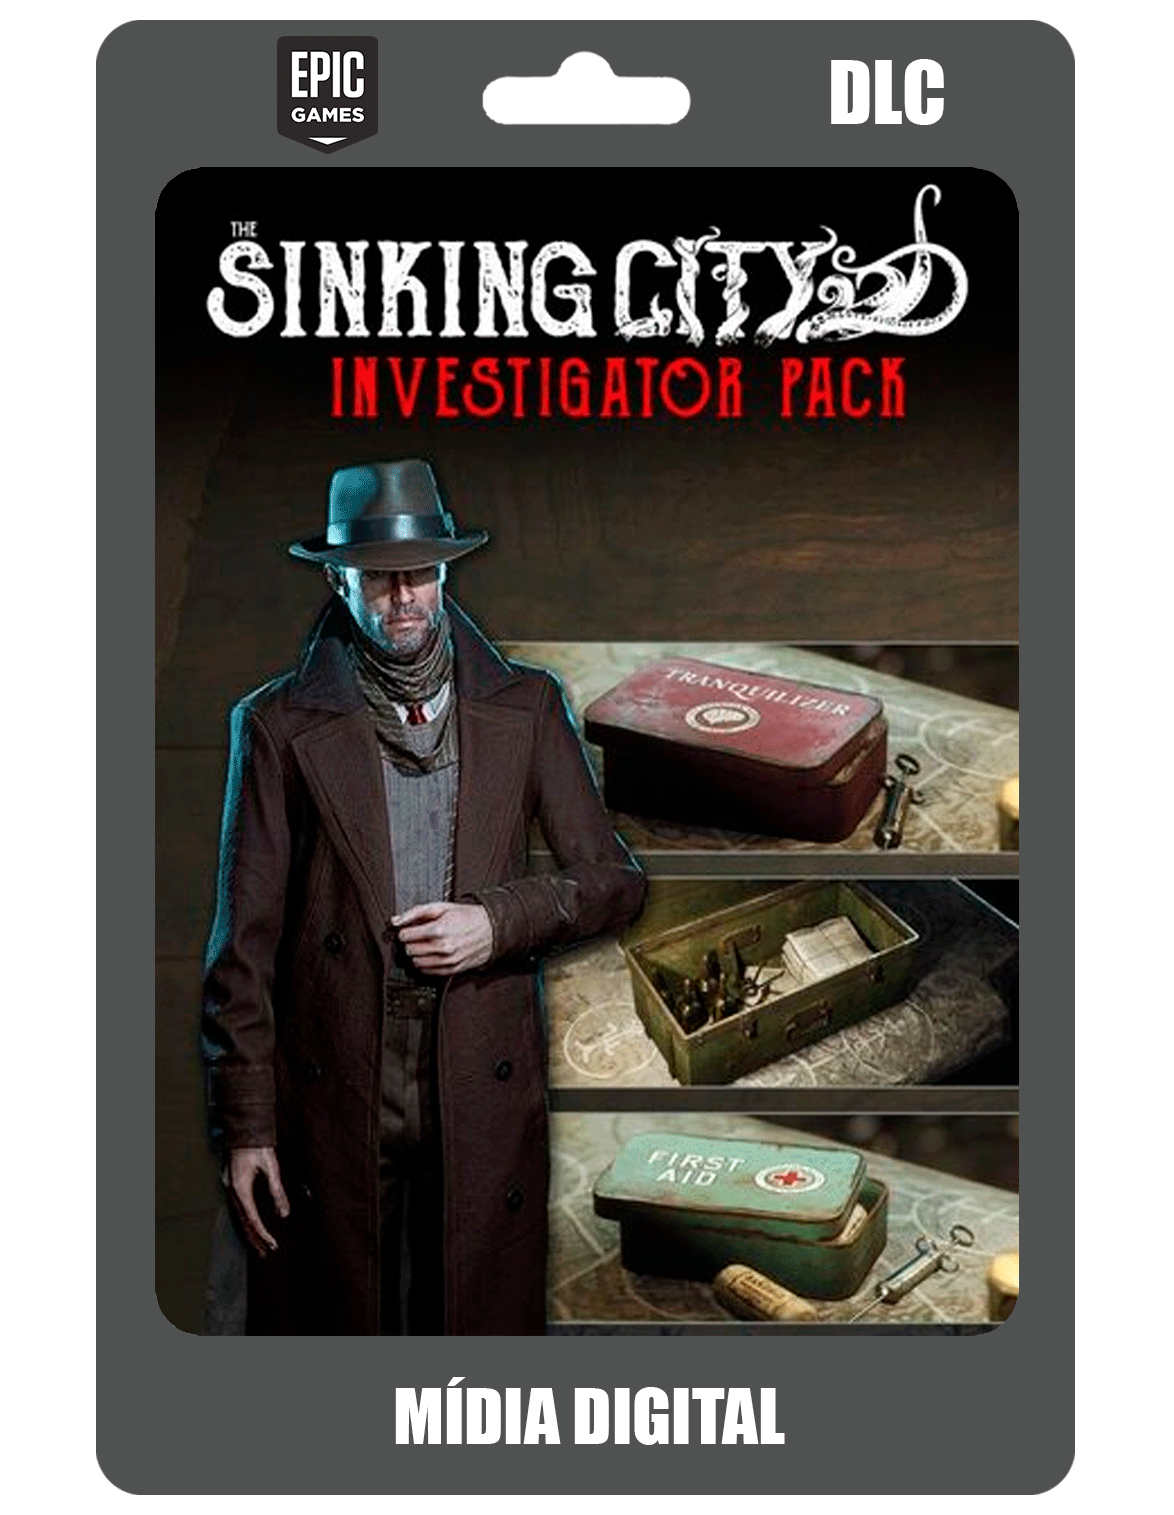 The Sinking City - Investigator Pack DLC